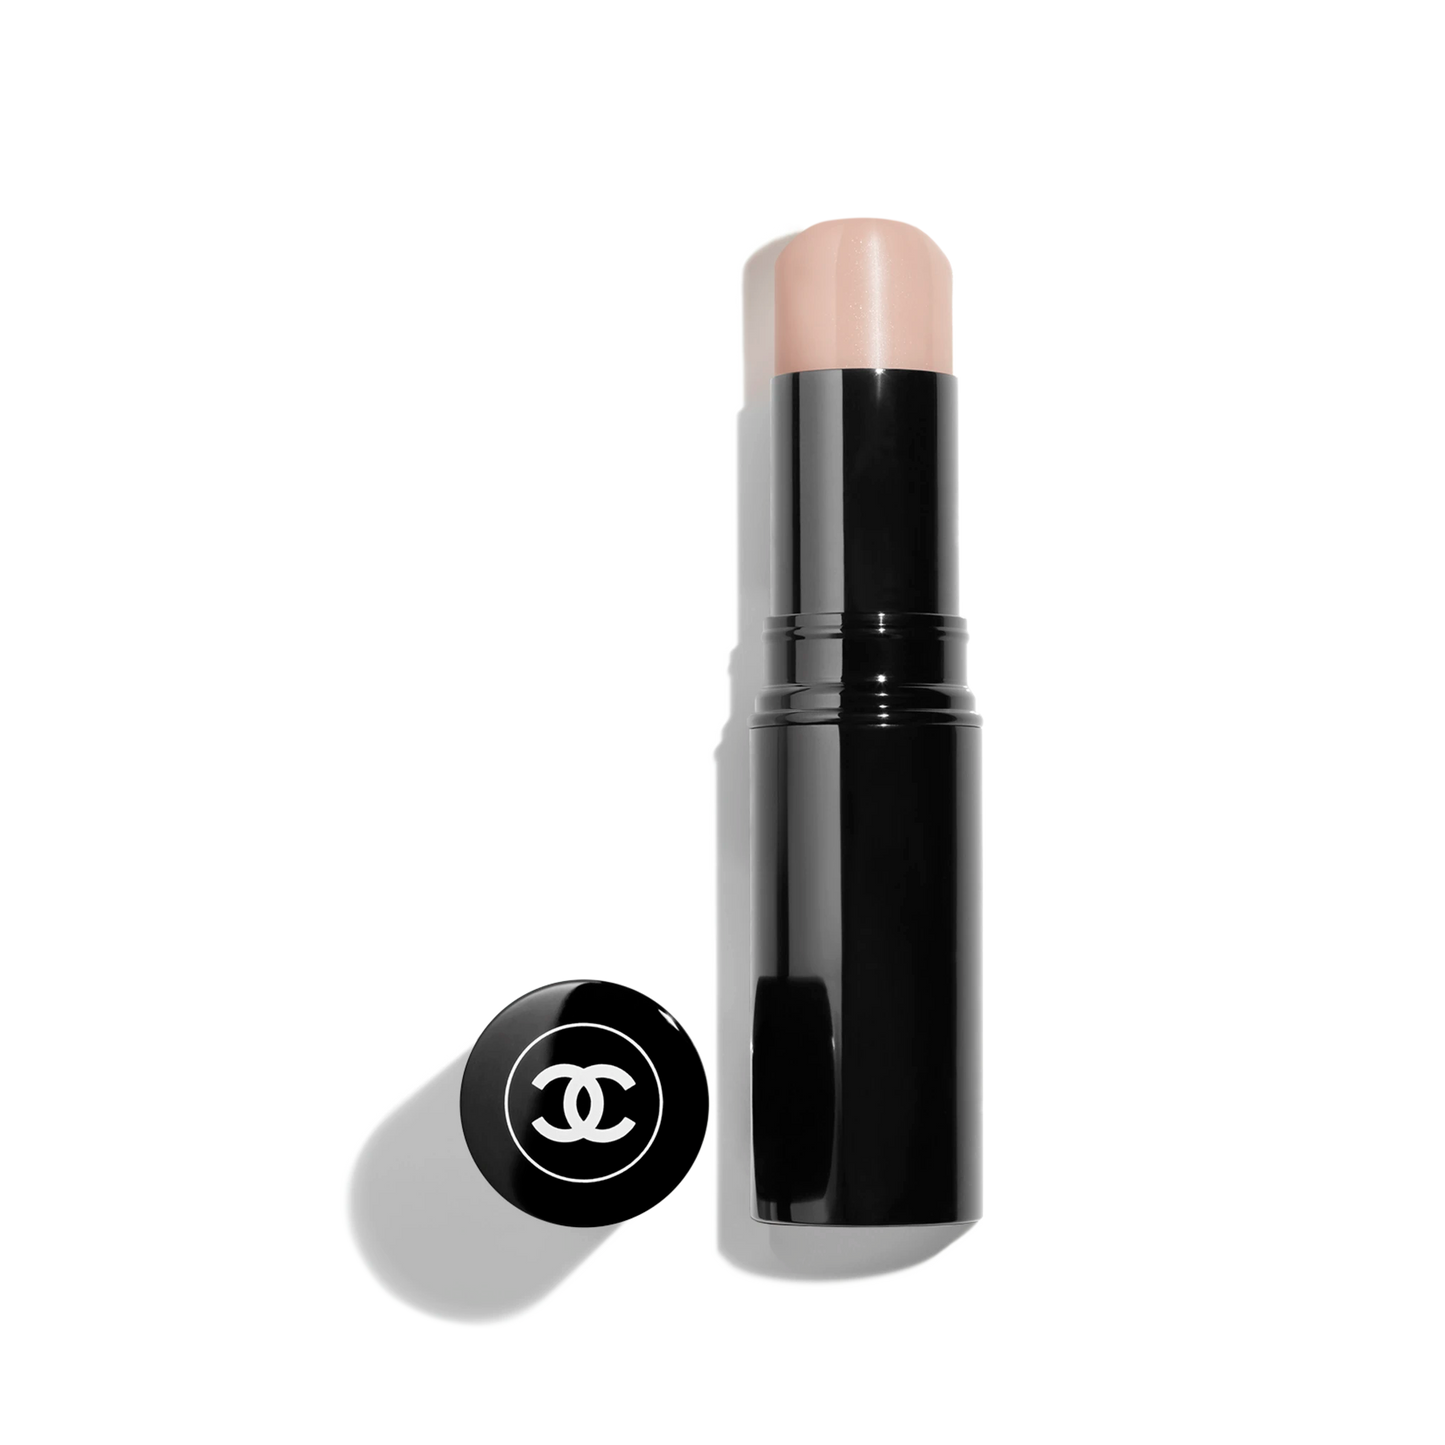 Chanel | BAUME ESSENTIEL Multi-Use Glow Stick TRANSPARENT - Translucent shade